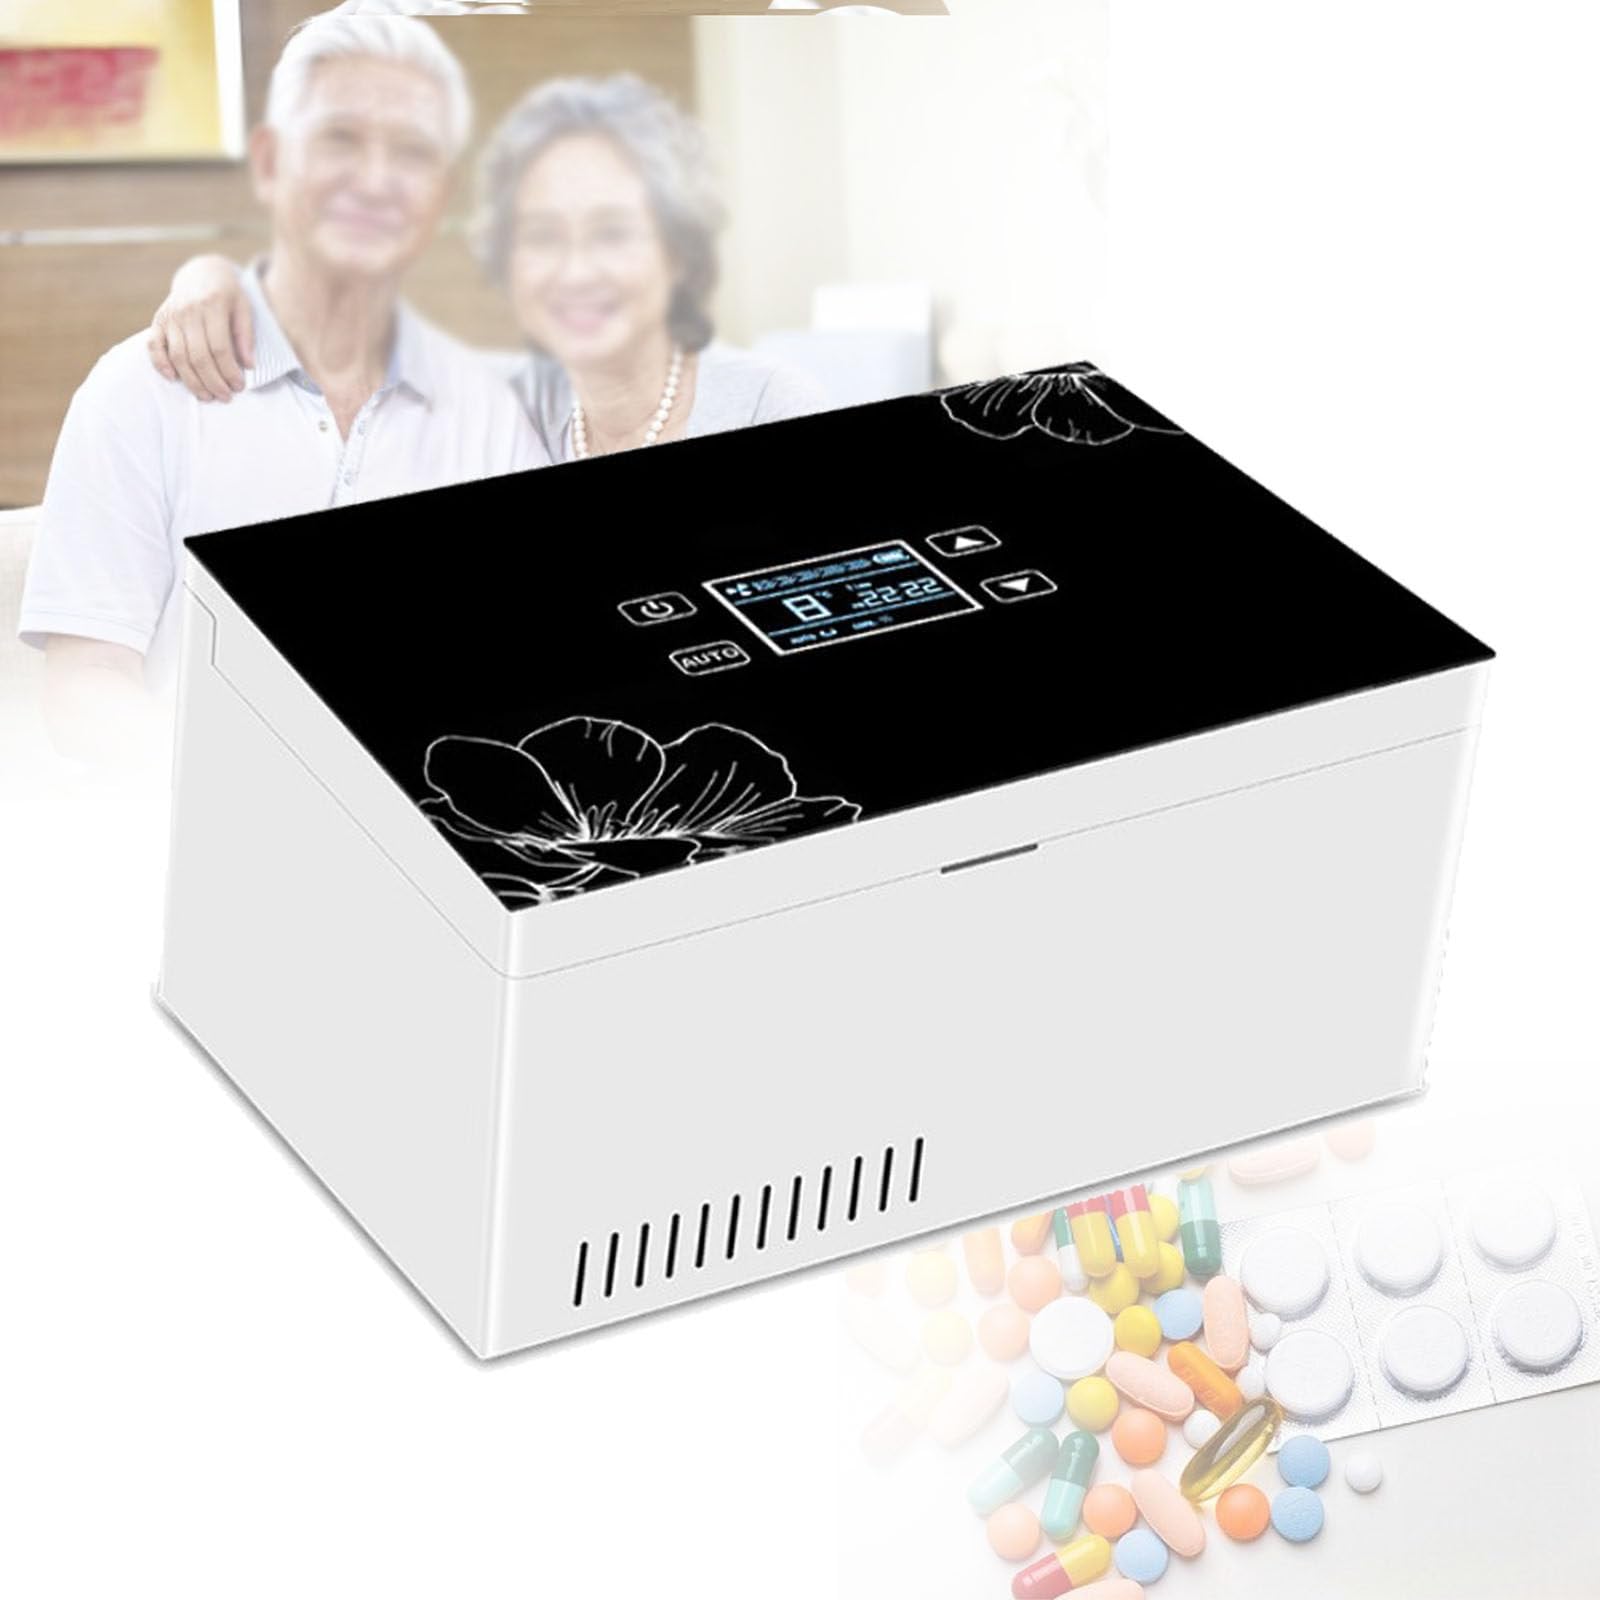 Electric cooler for medicines Insulin kihlbox Portable Insulin Cooler Box  For Medication Insulin Cooler Case for Car Travel Home Twobatteries